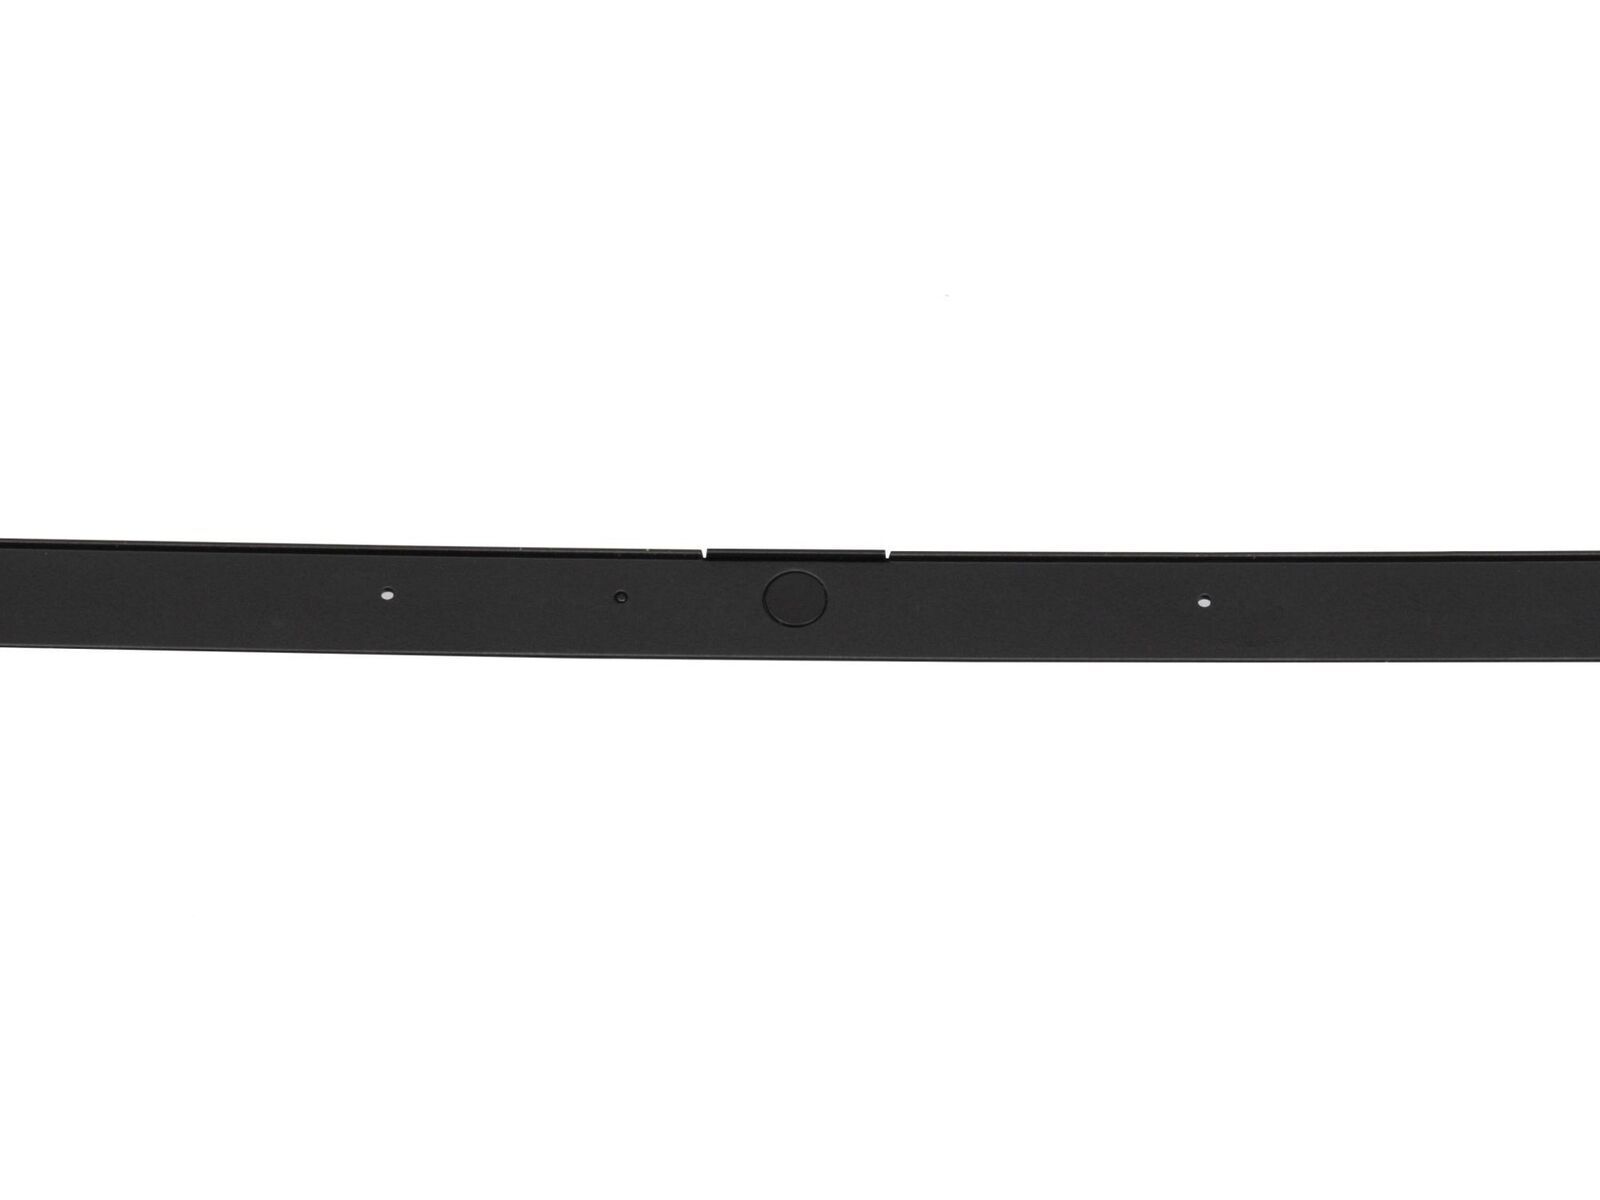 Marco de pantalla genuino HP M13782-001 35,6 cm (14 pulgadas) negro